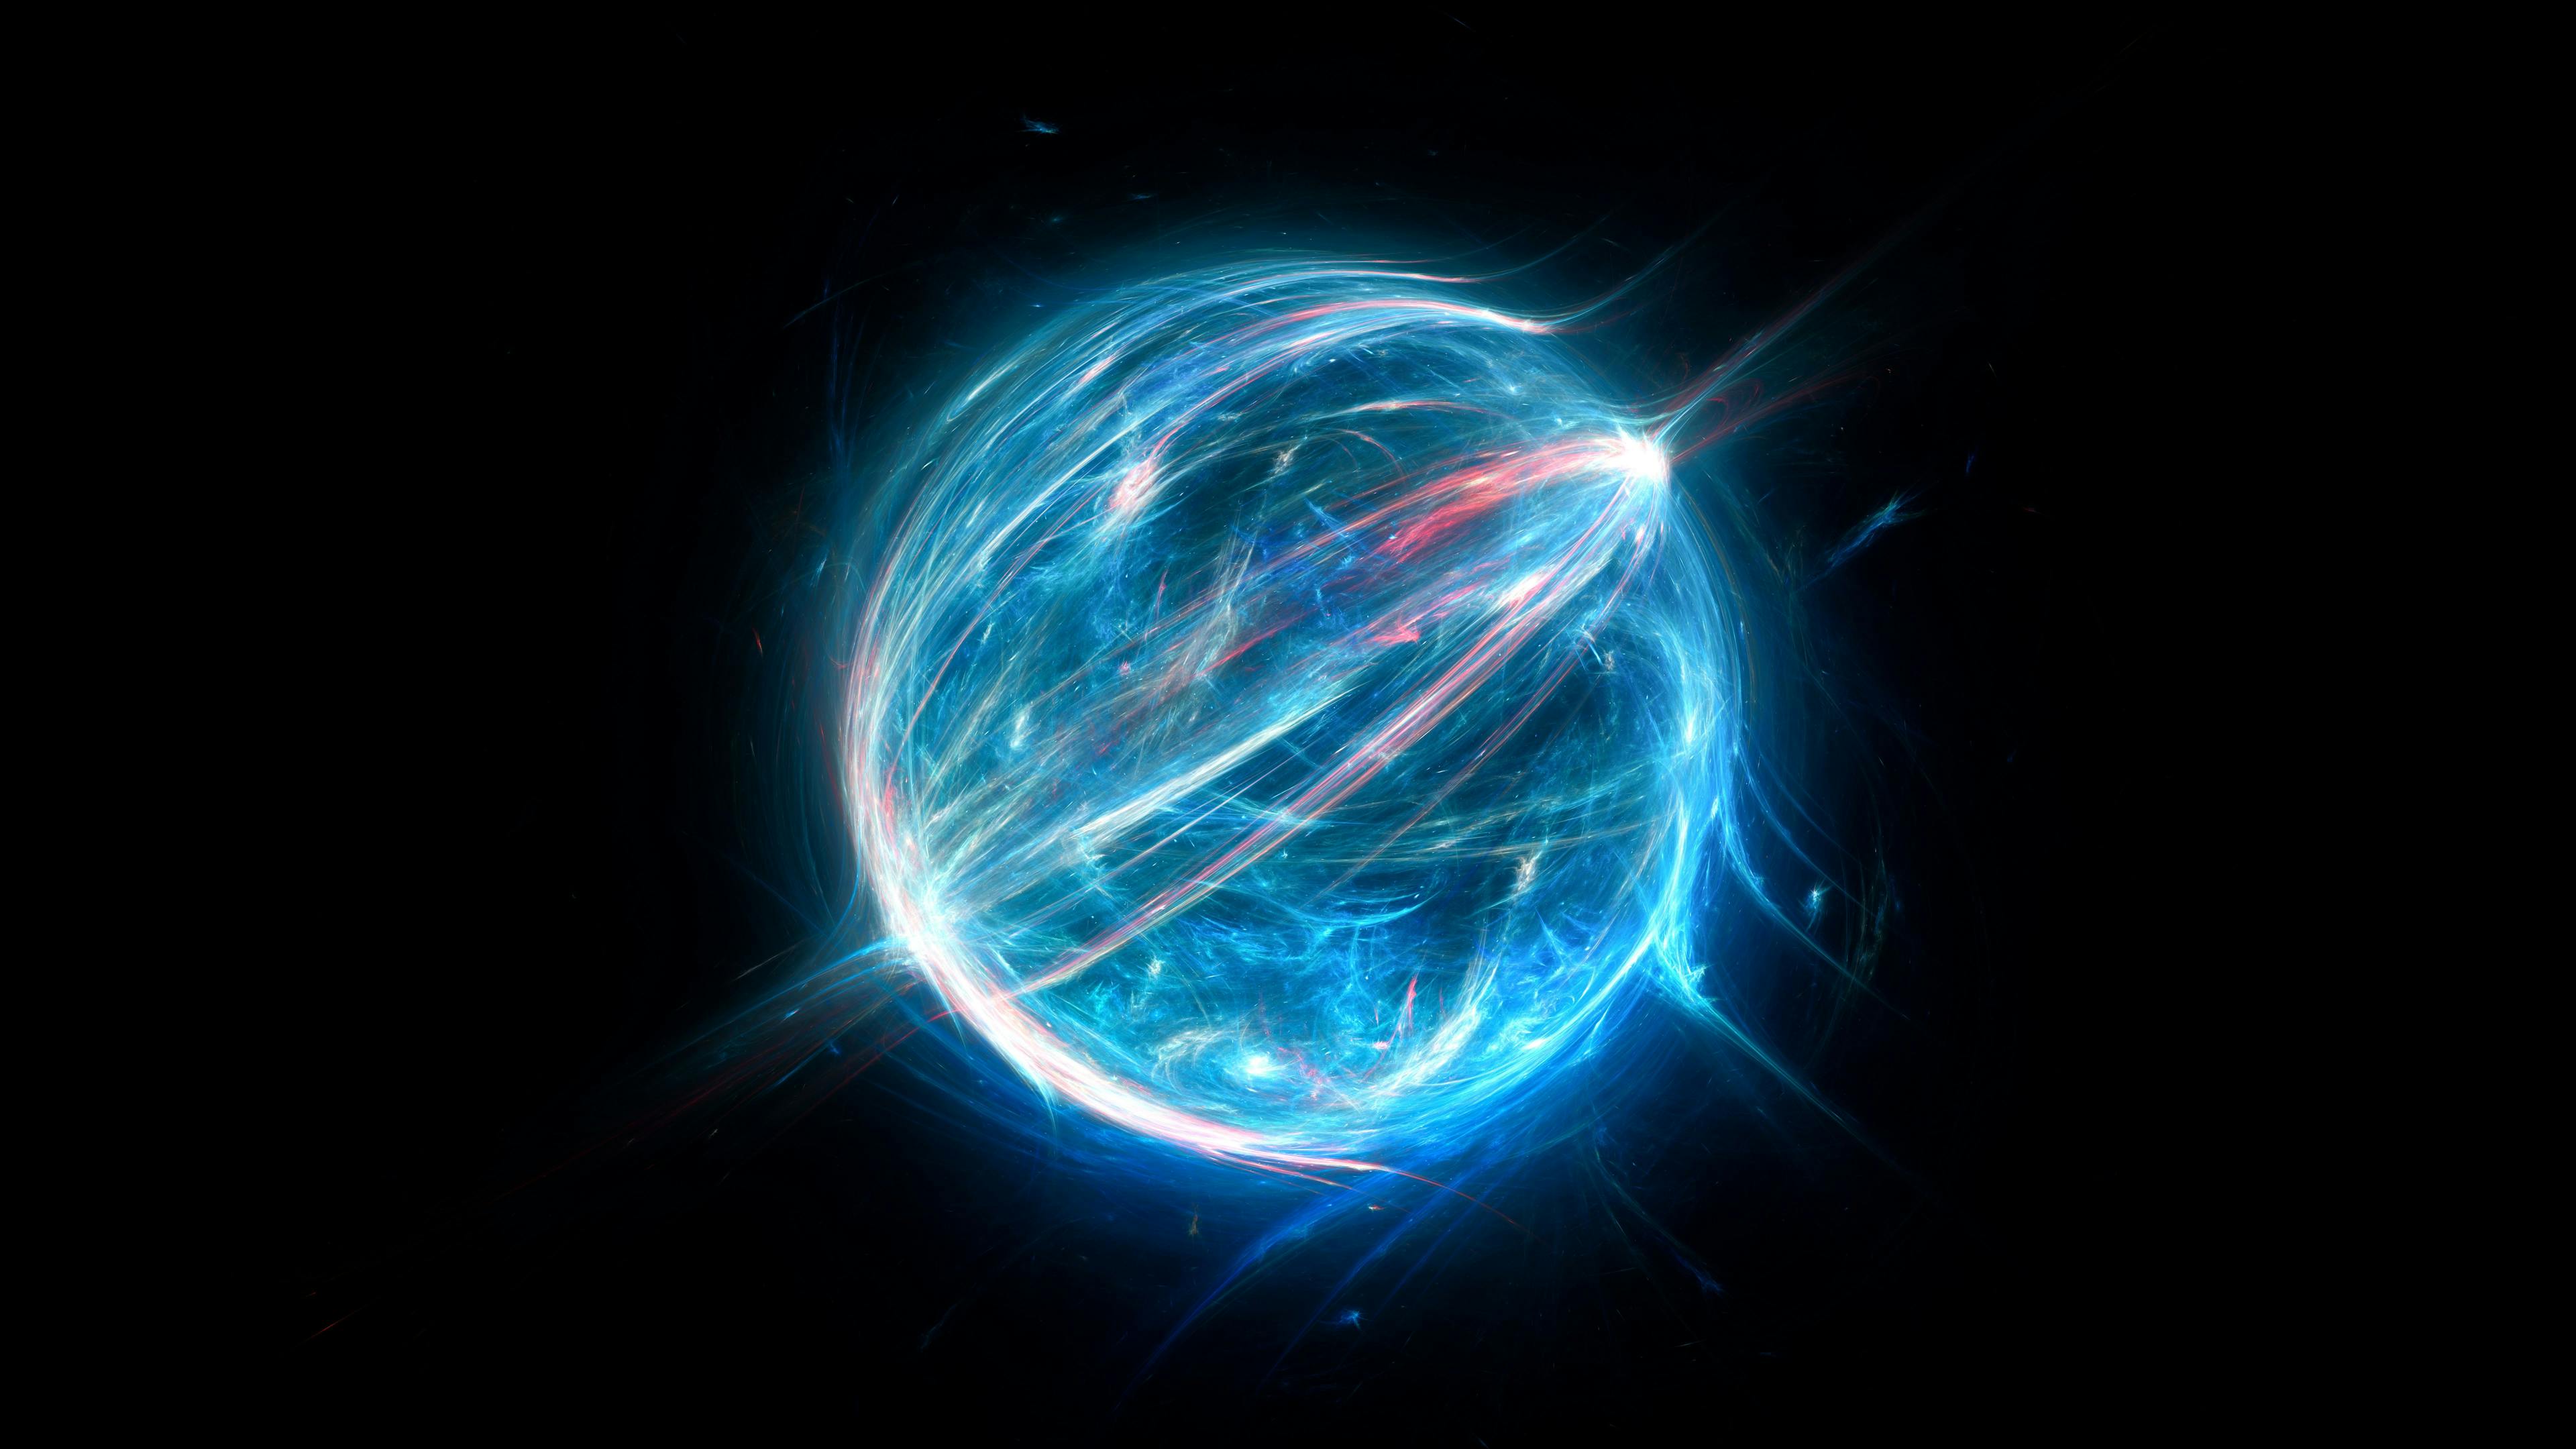 Blue glowing plasma ball lightning abstract background | Image Credit: © sakkmesterke - stock.adobe.com